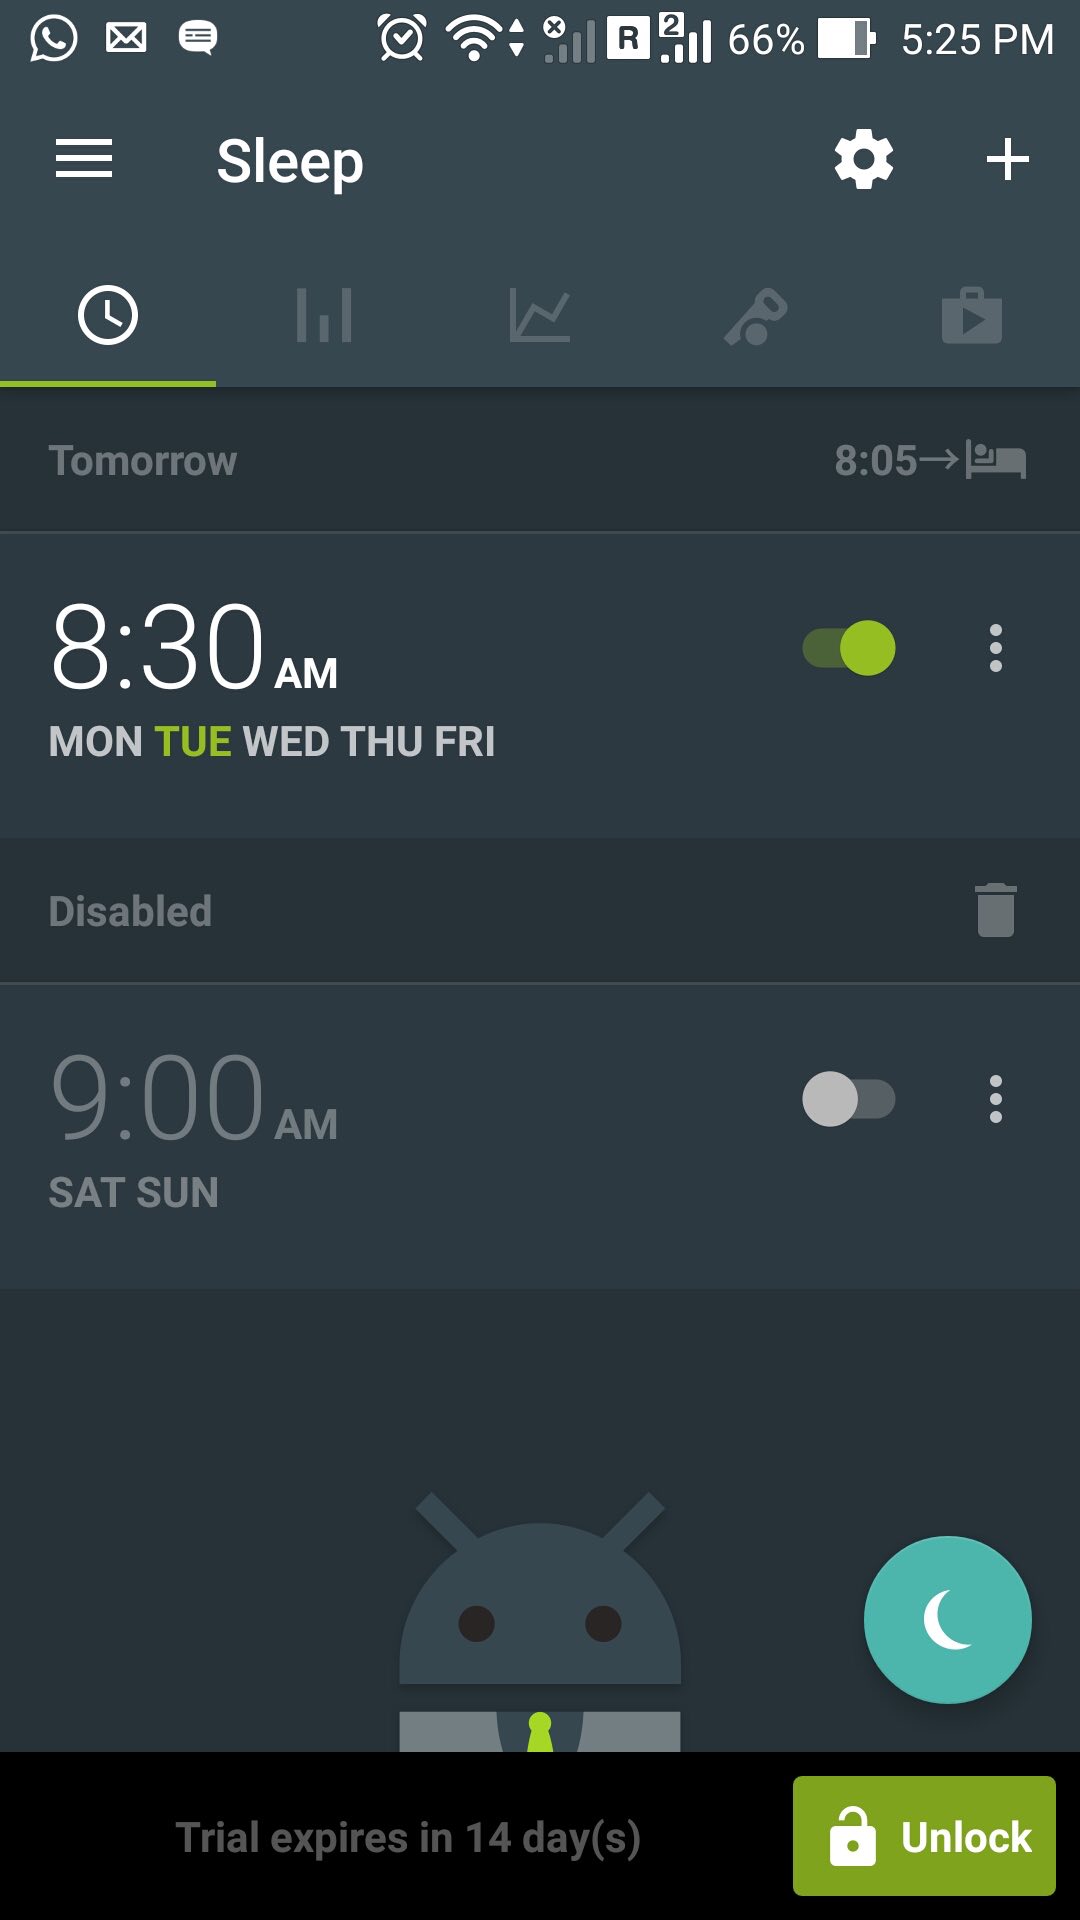 android wear sleep tracking